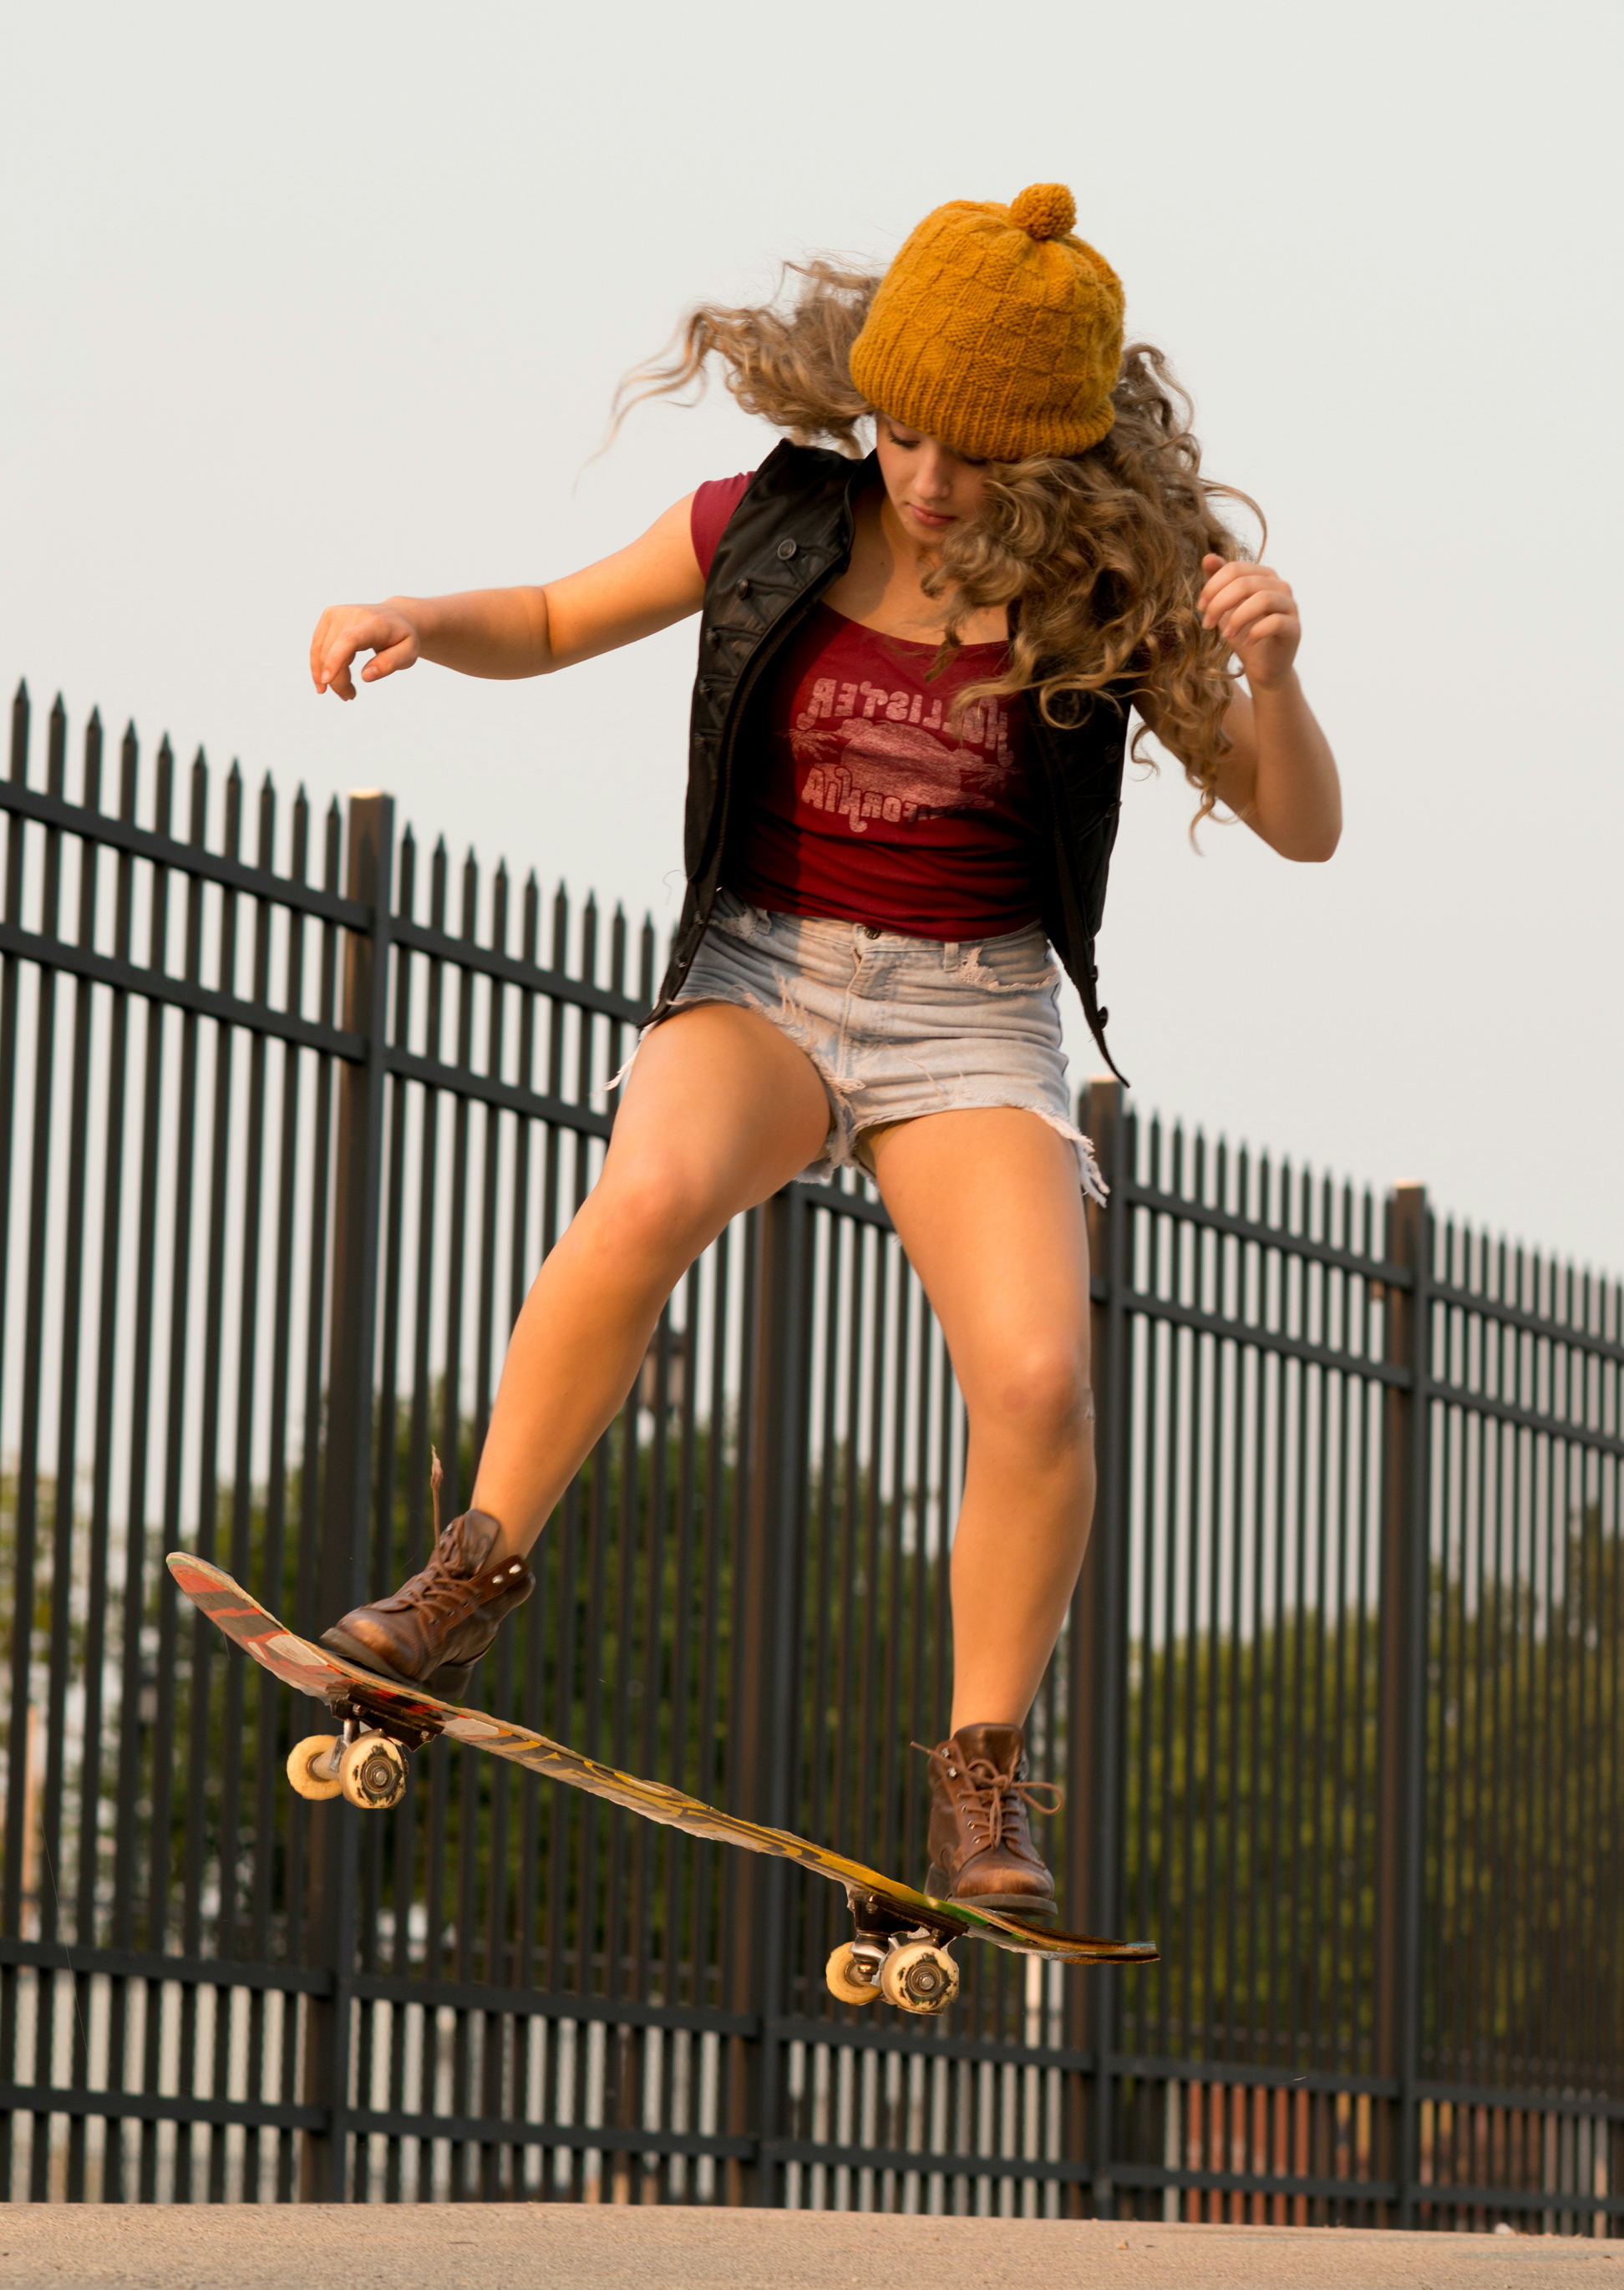 Cameron MacKenzie Skateboarding in Fargo in 2013.